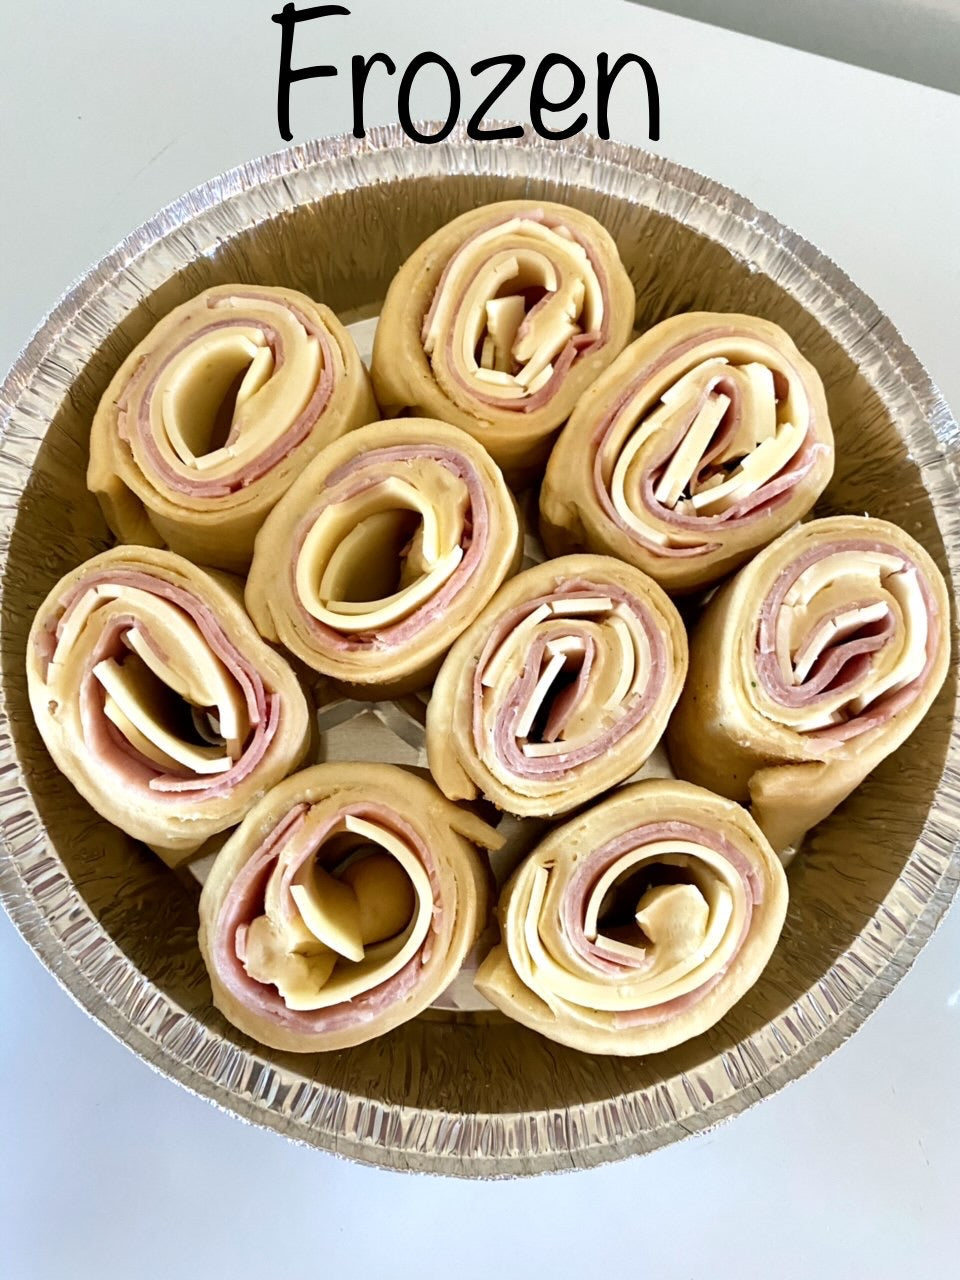 Ham, Swiss and Provolone rolls